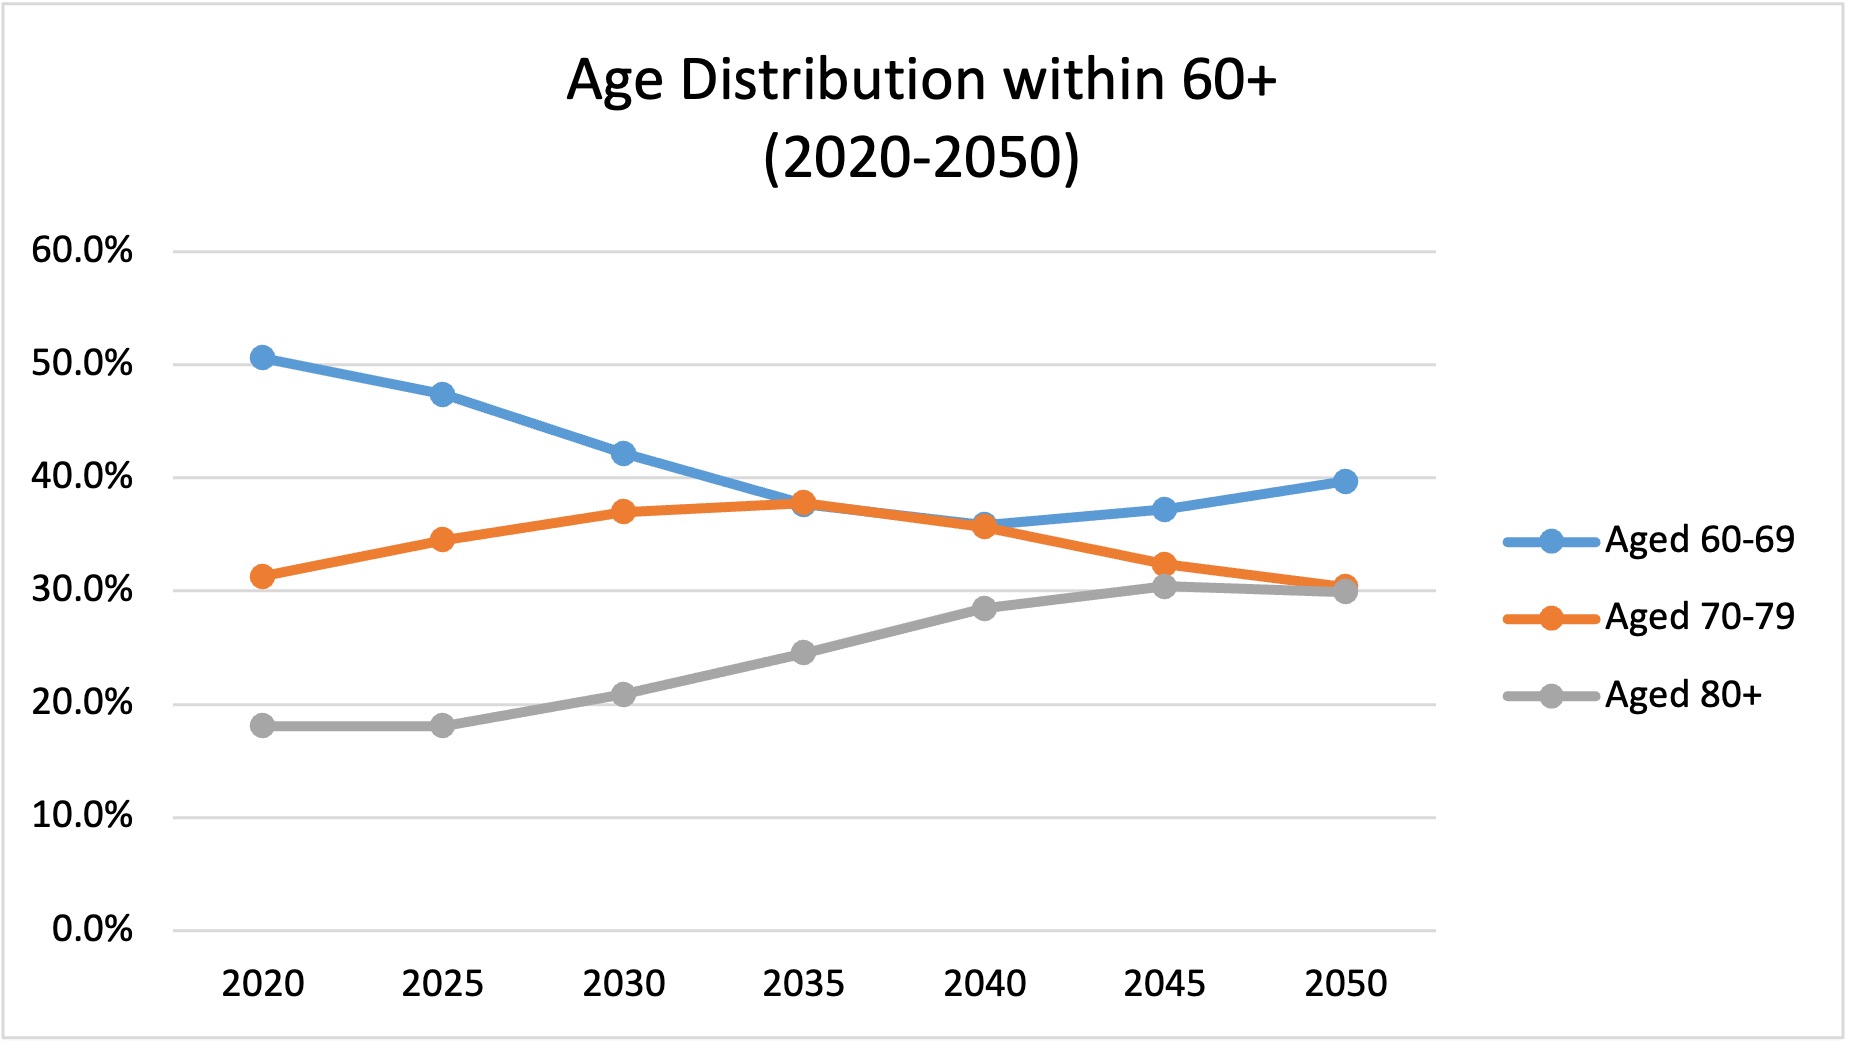 Age Distribution 60+ (2020-2050)